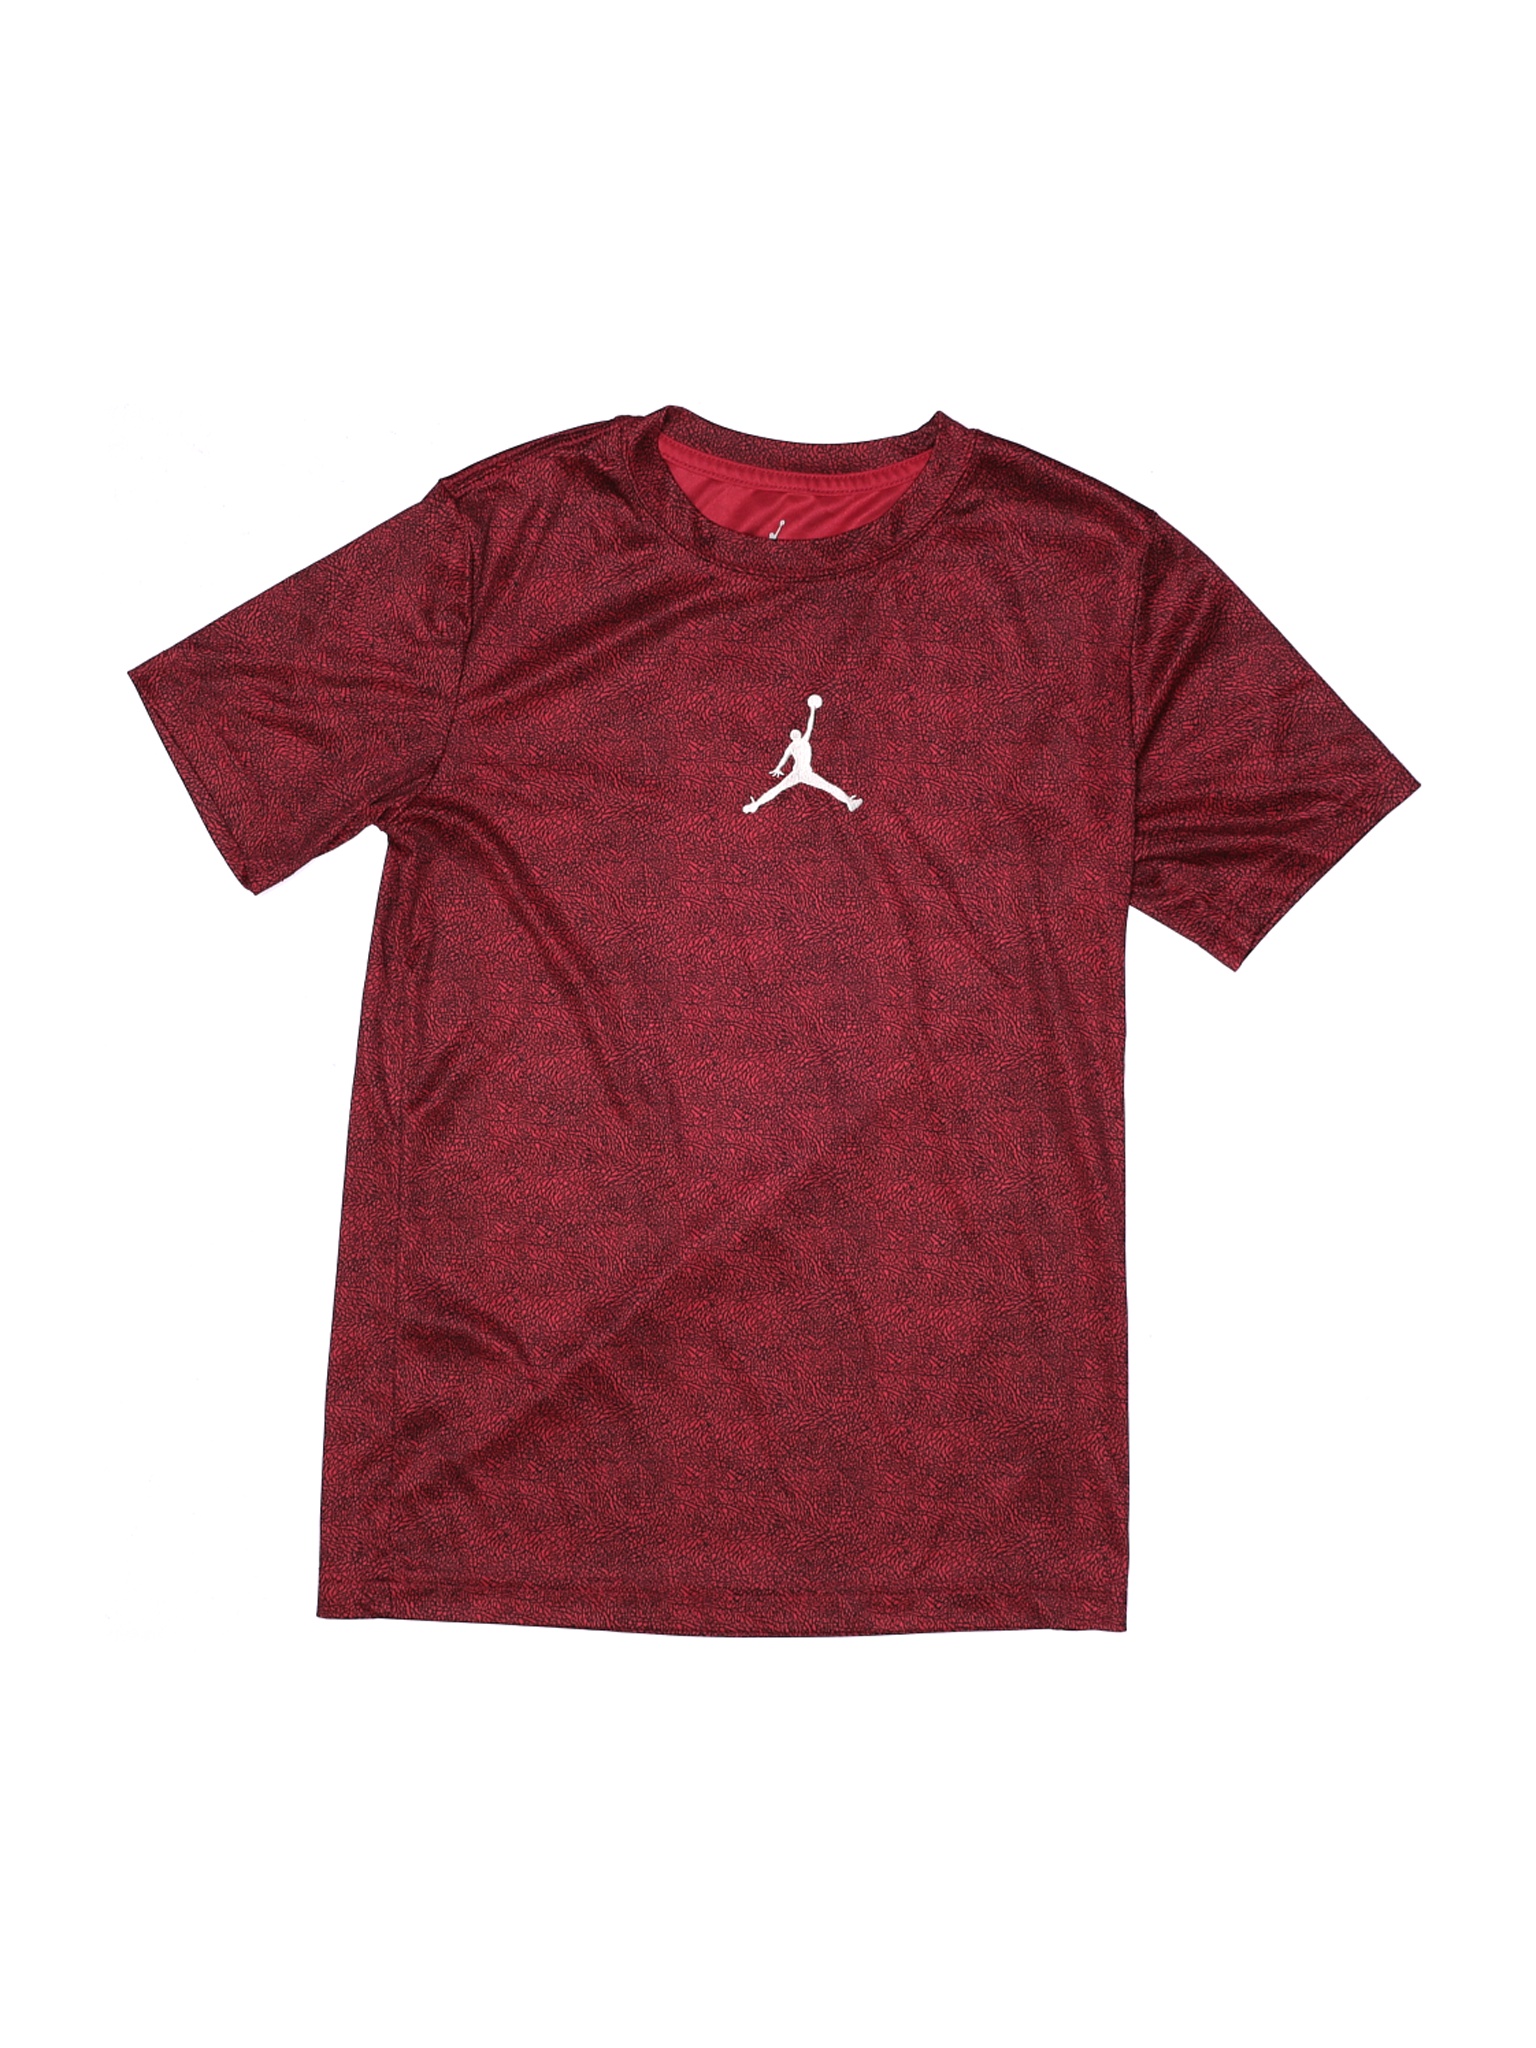 Jordan Boys Red Active T-Shirt Medium kids | eBay